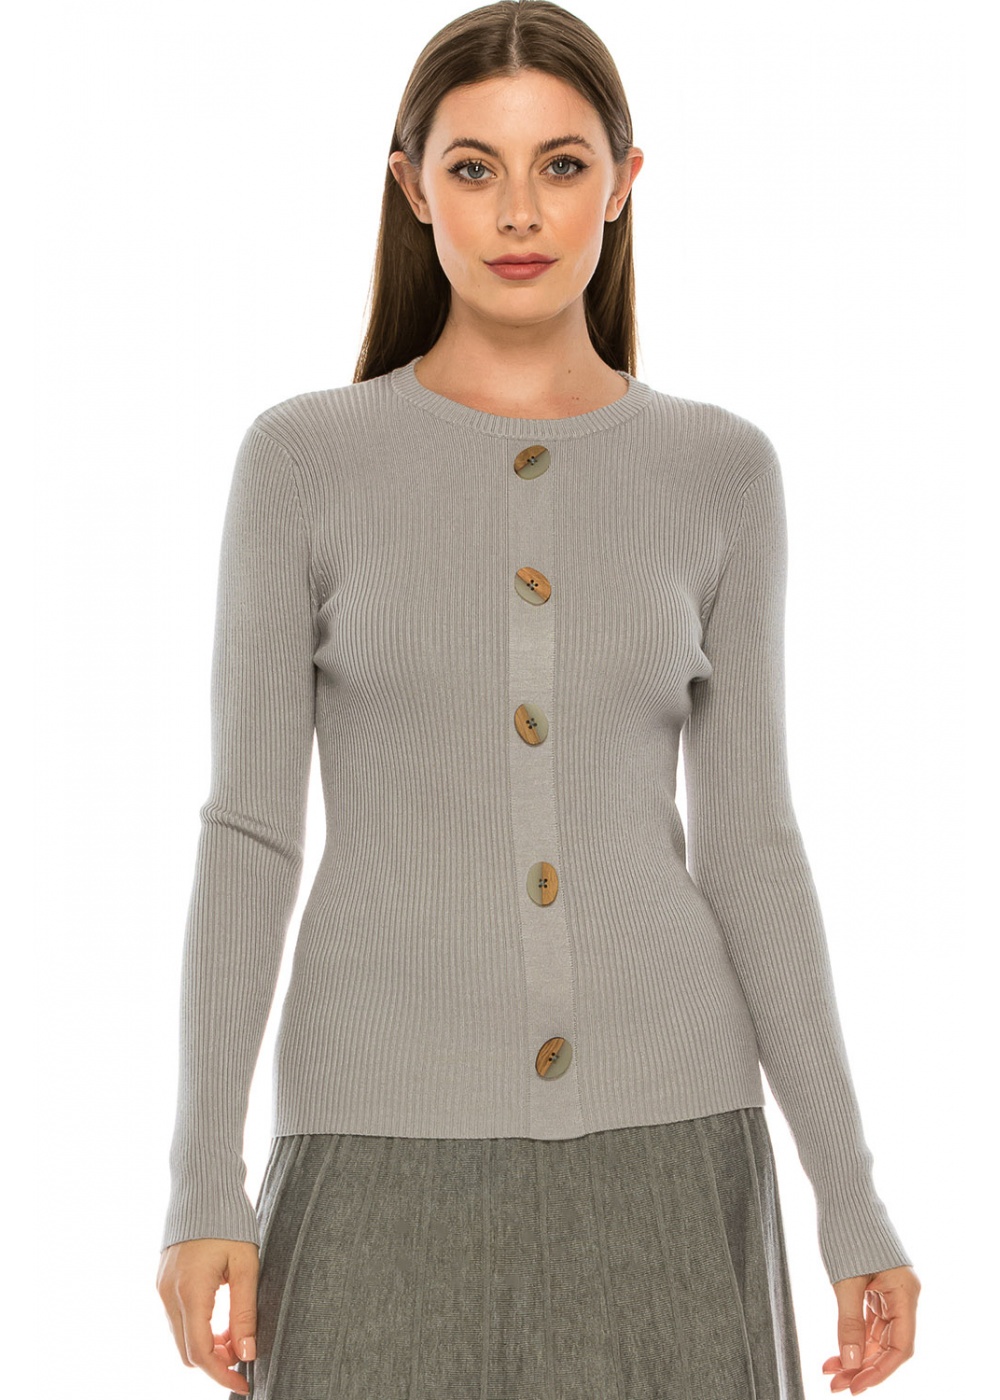 Wooden Button Sweater - grey